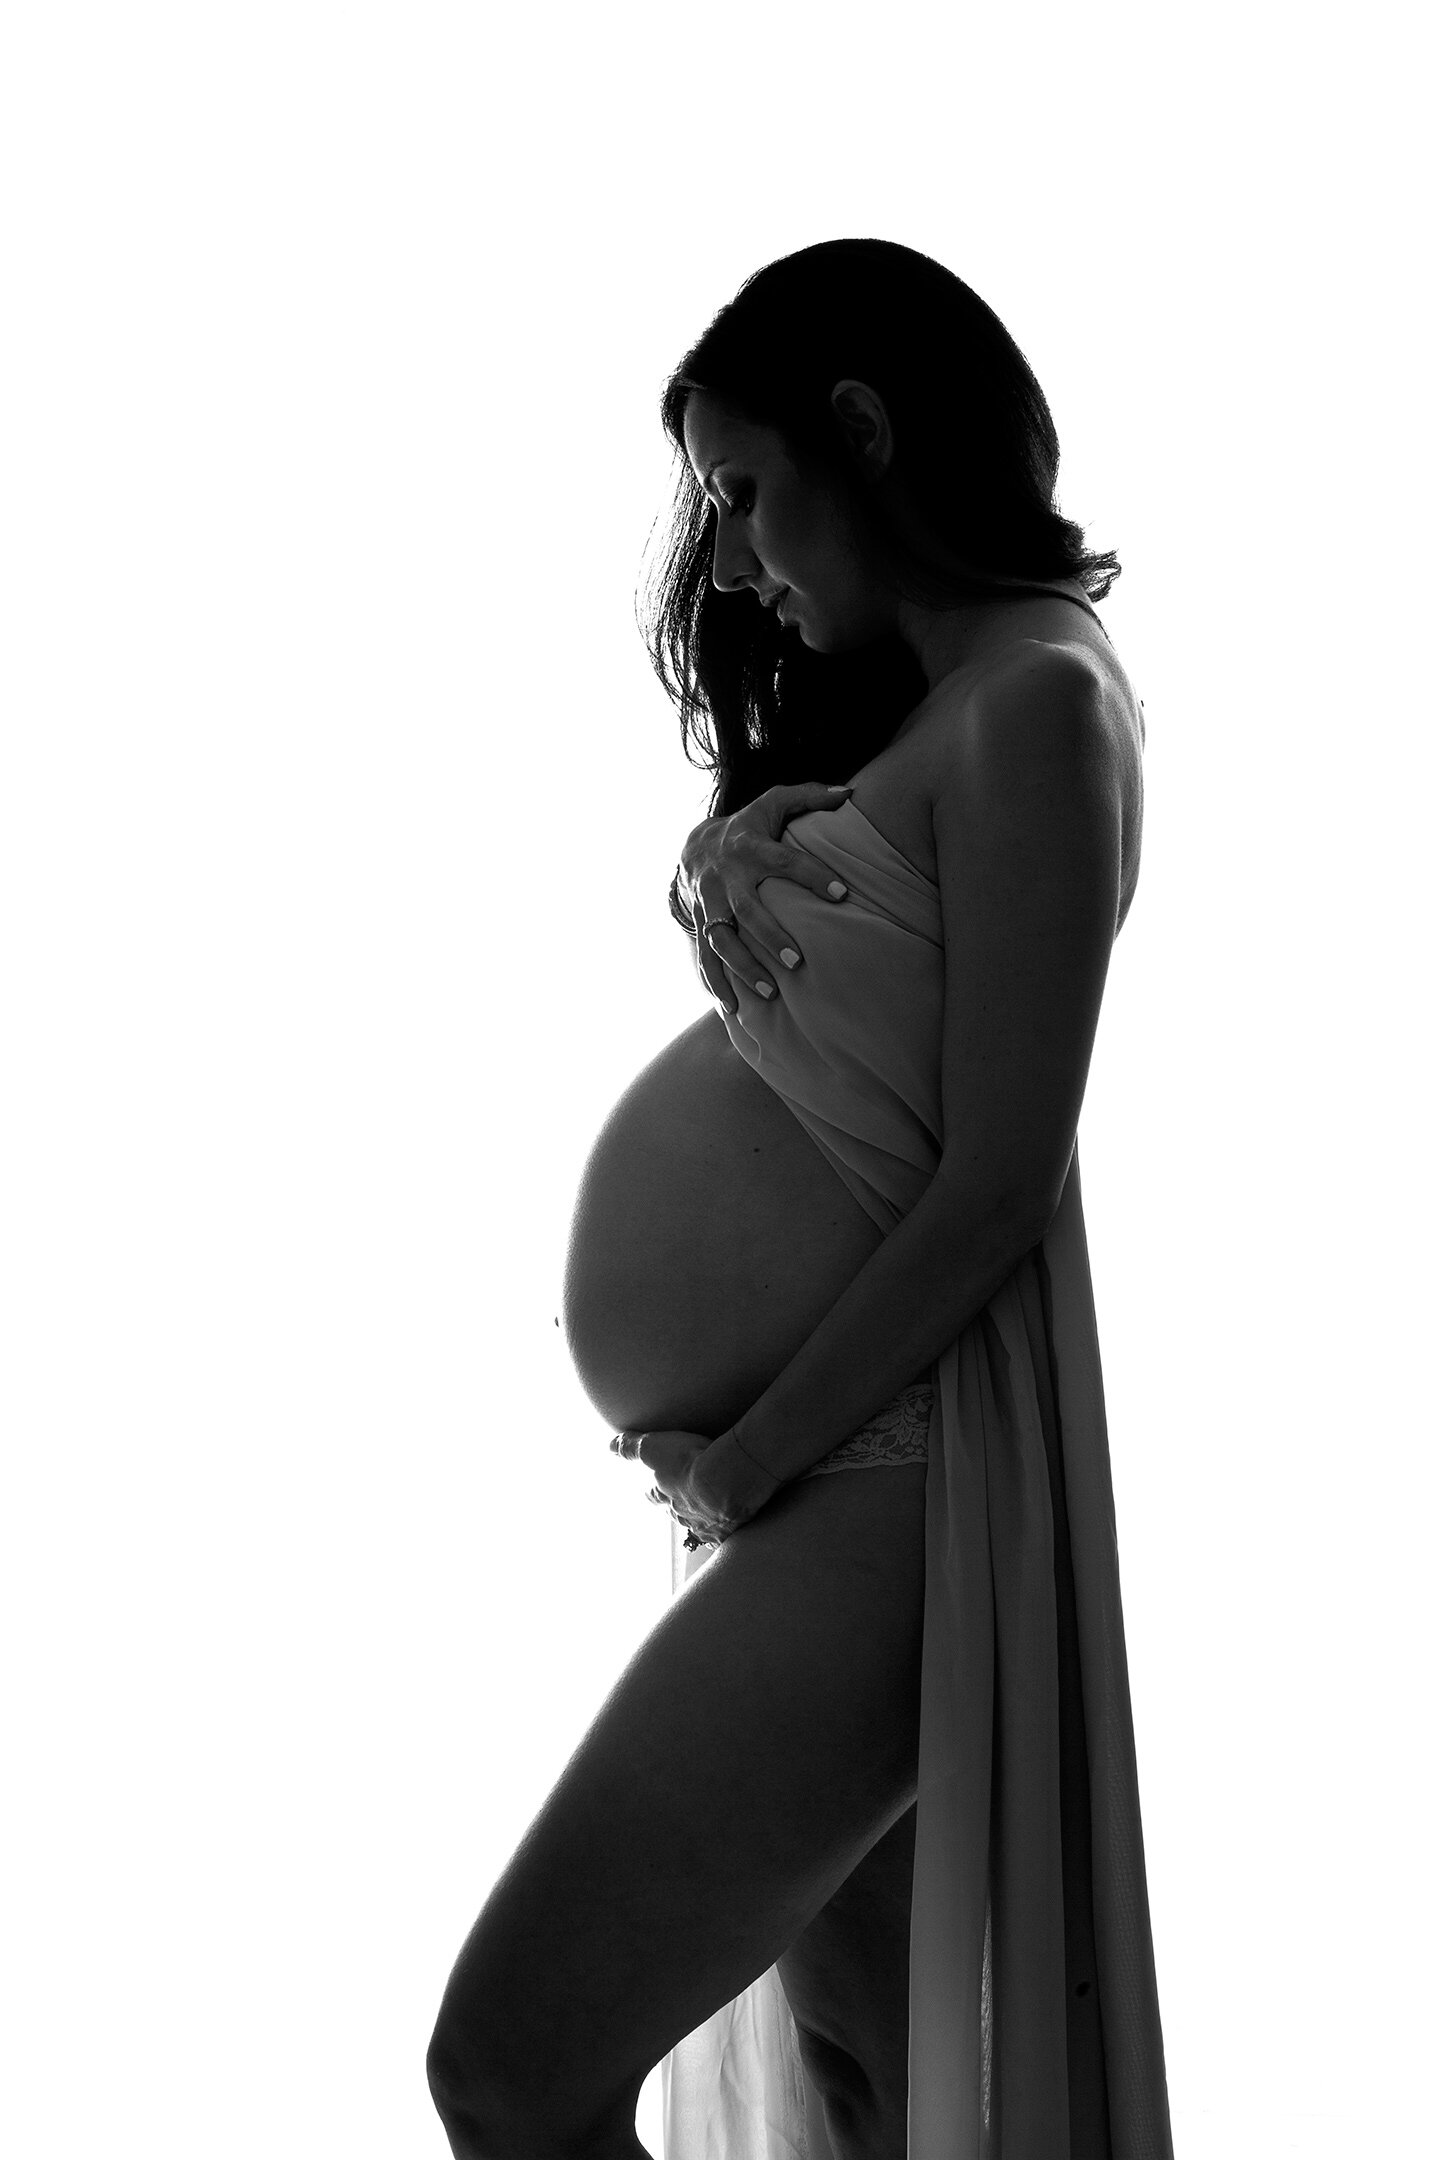 montreal-maternity-photographer- 10.jpg